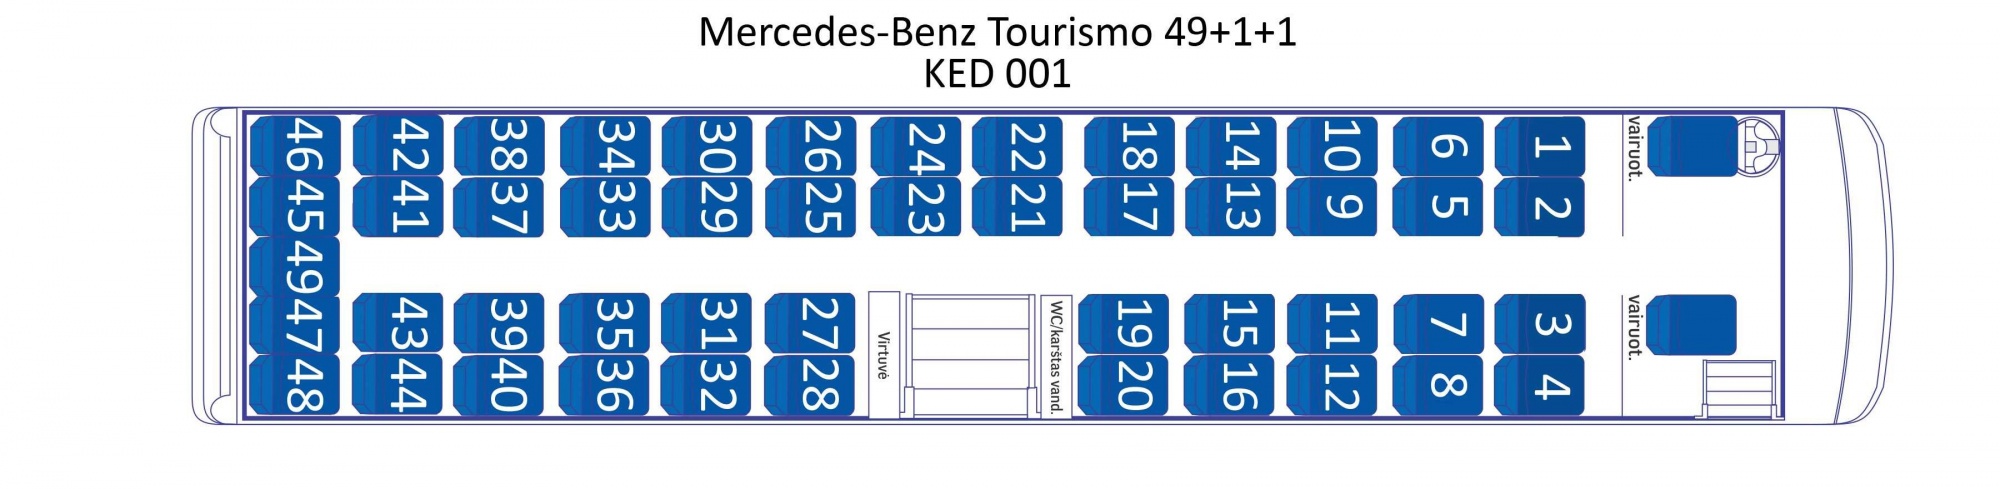 Схема автобуса Мерседес на 49 мест